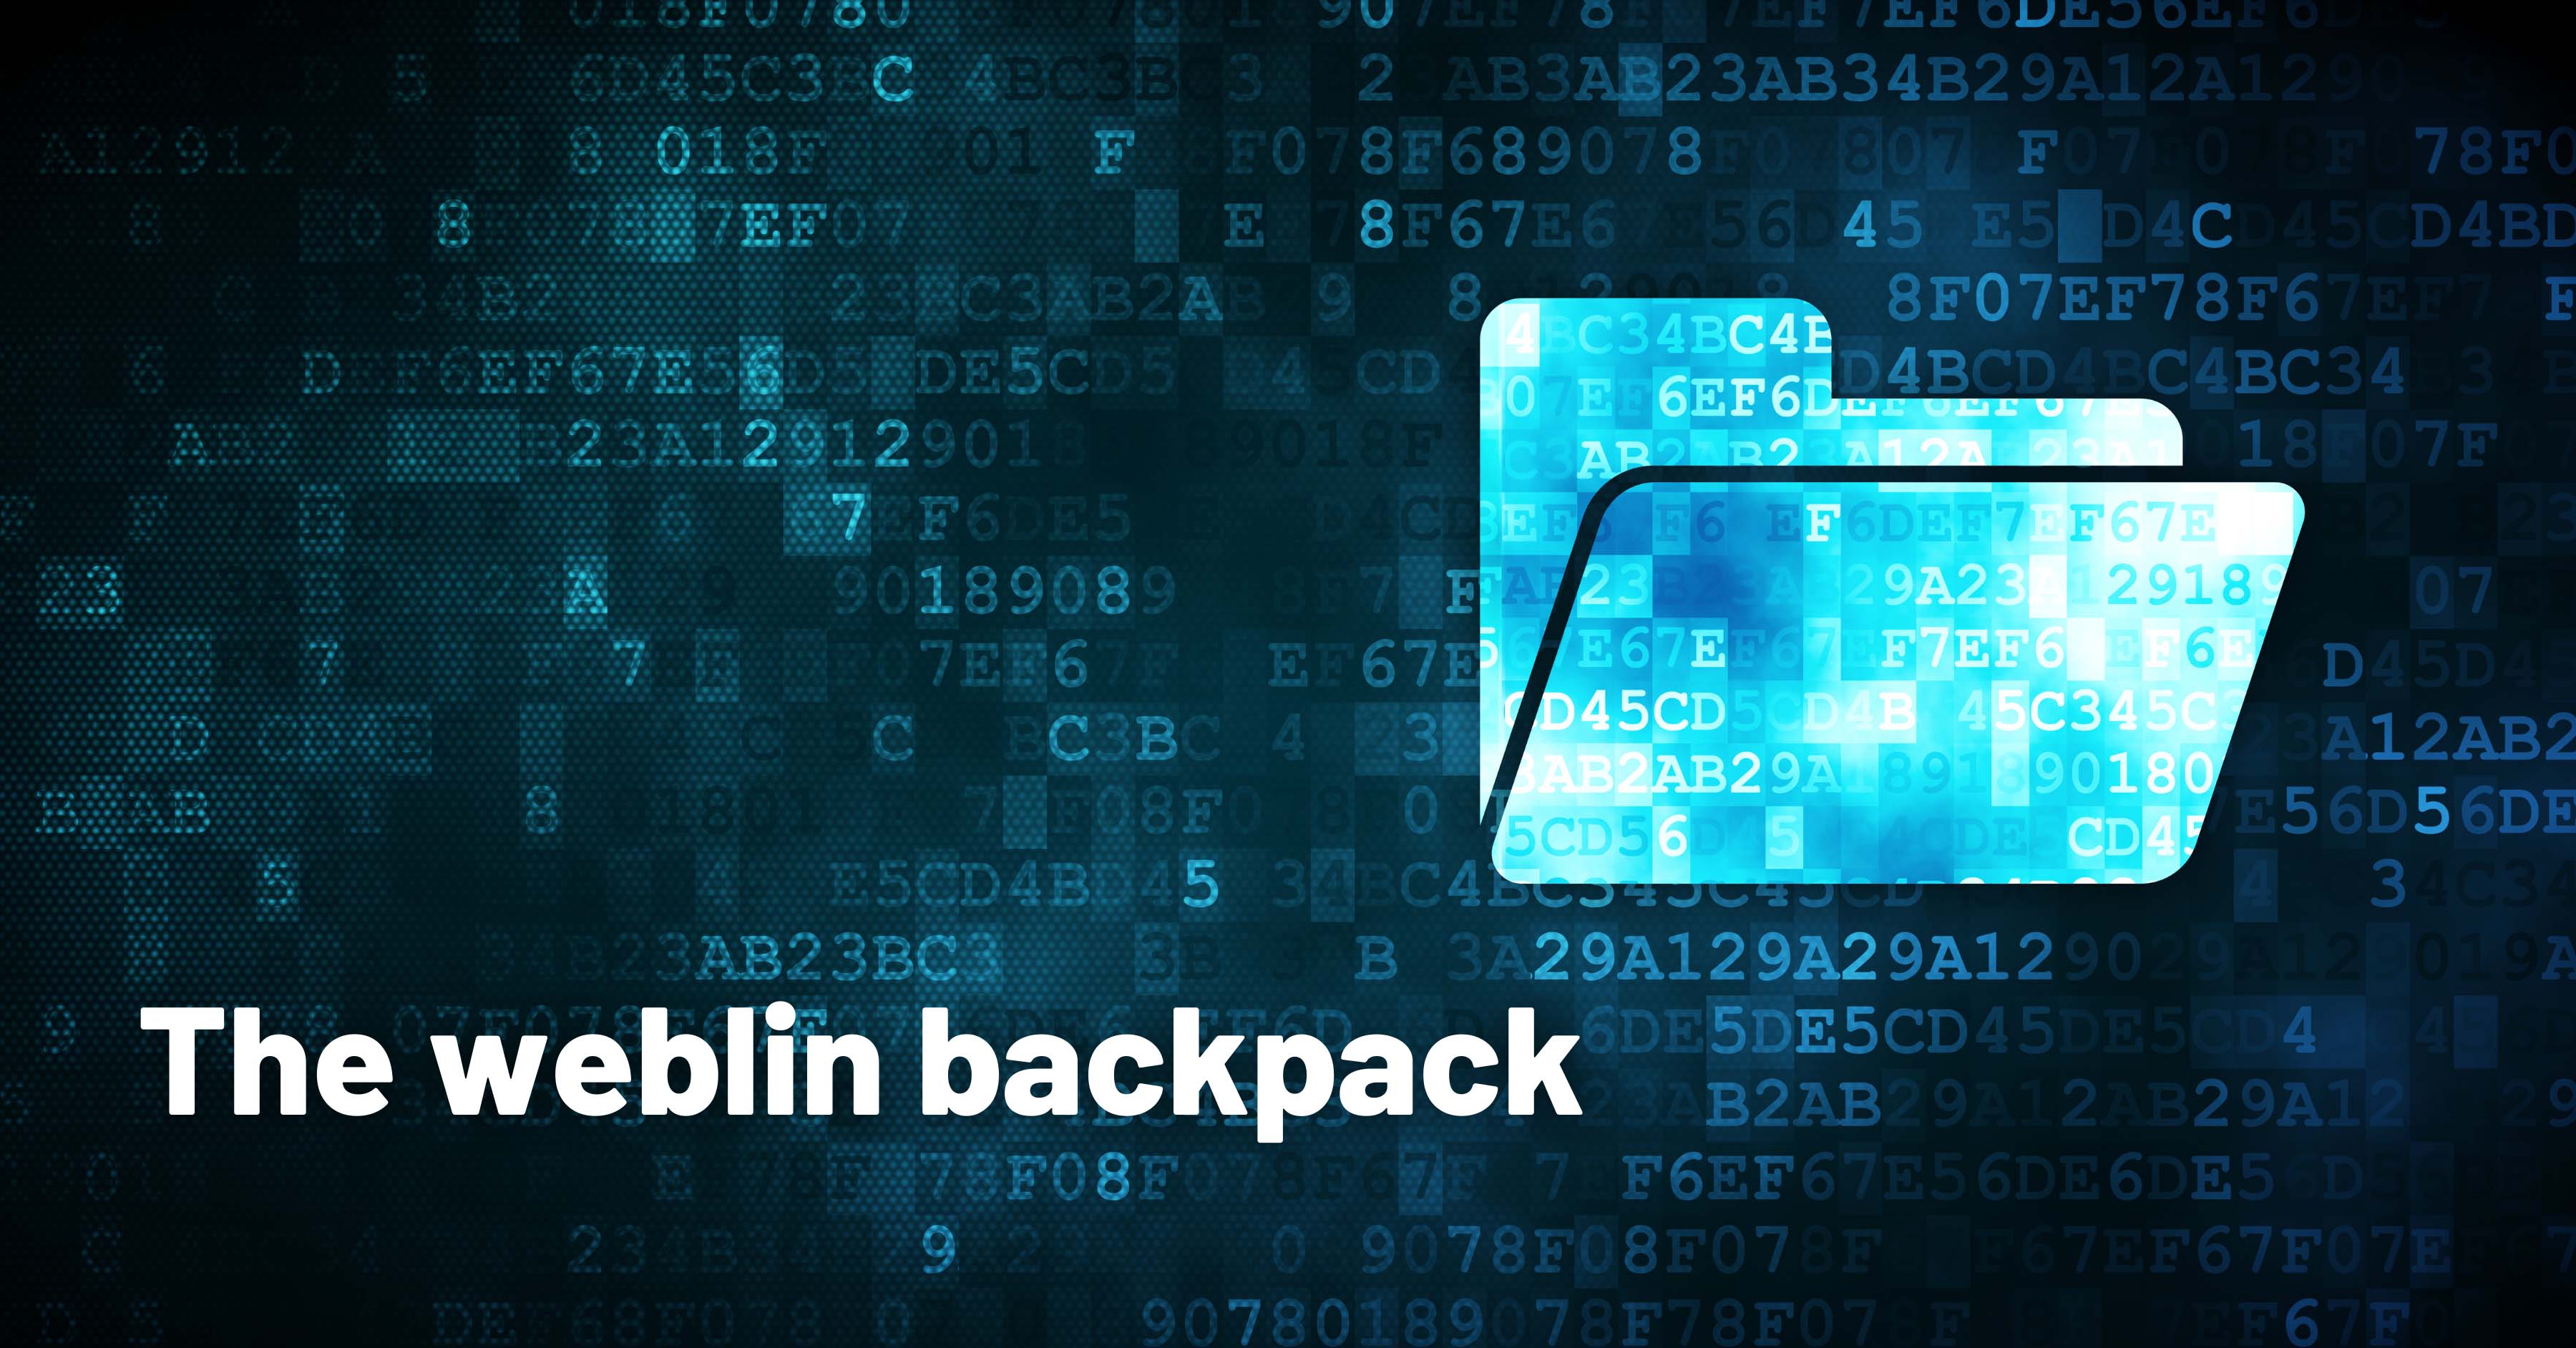 The weblin backpack